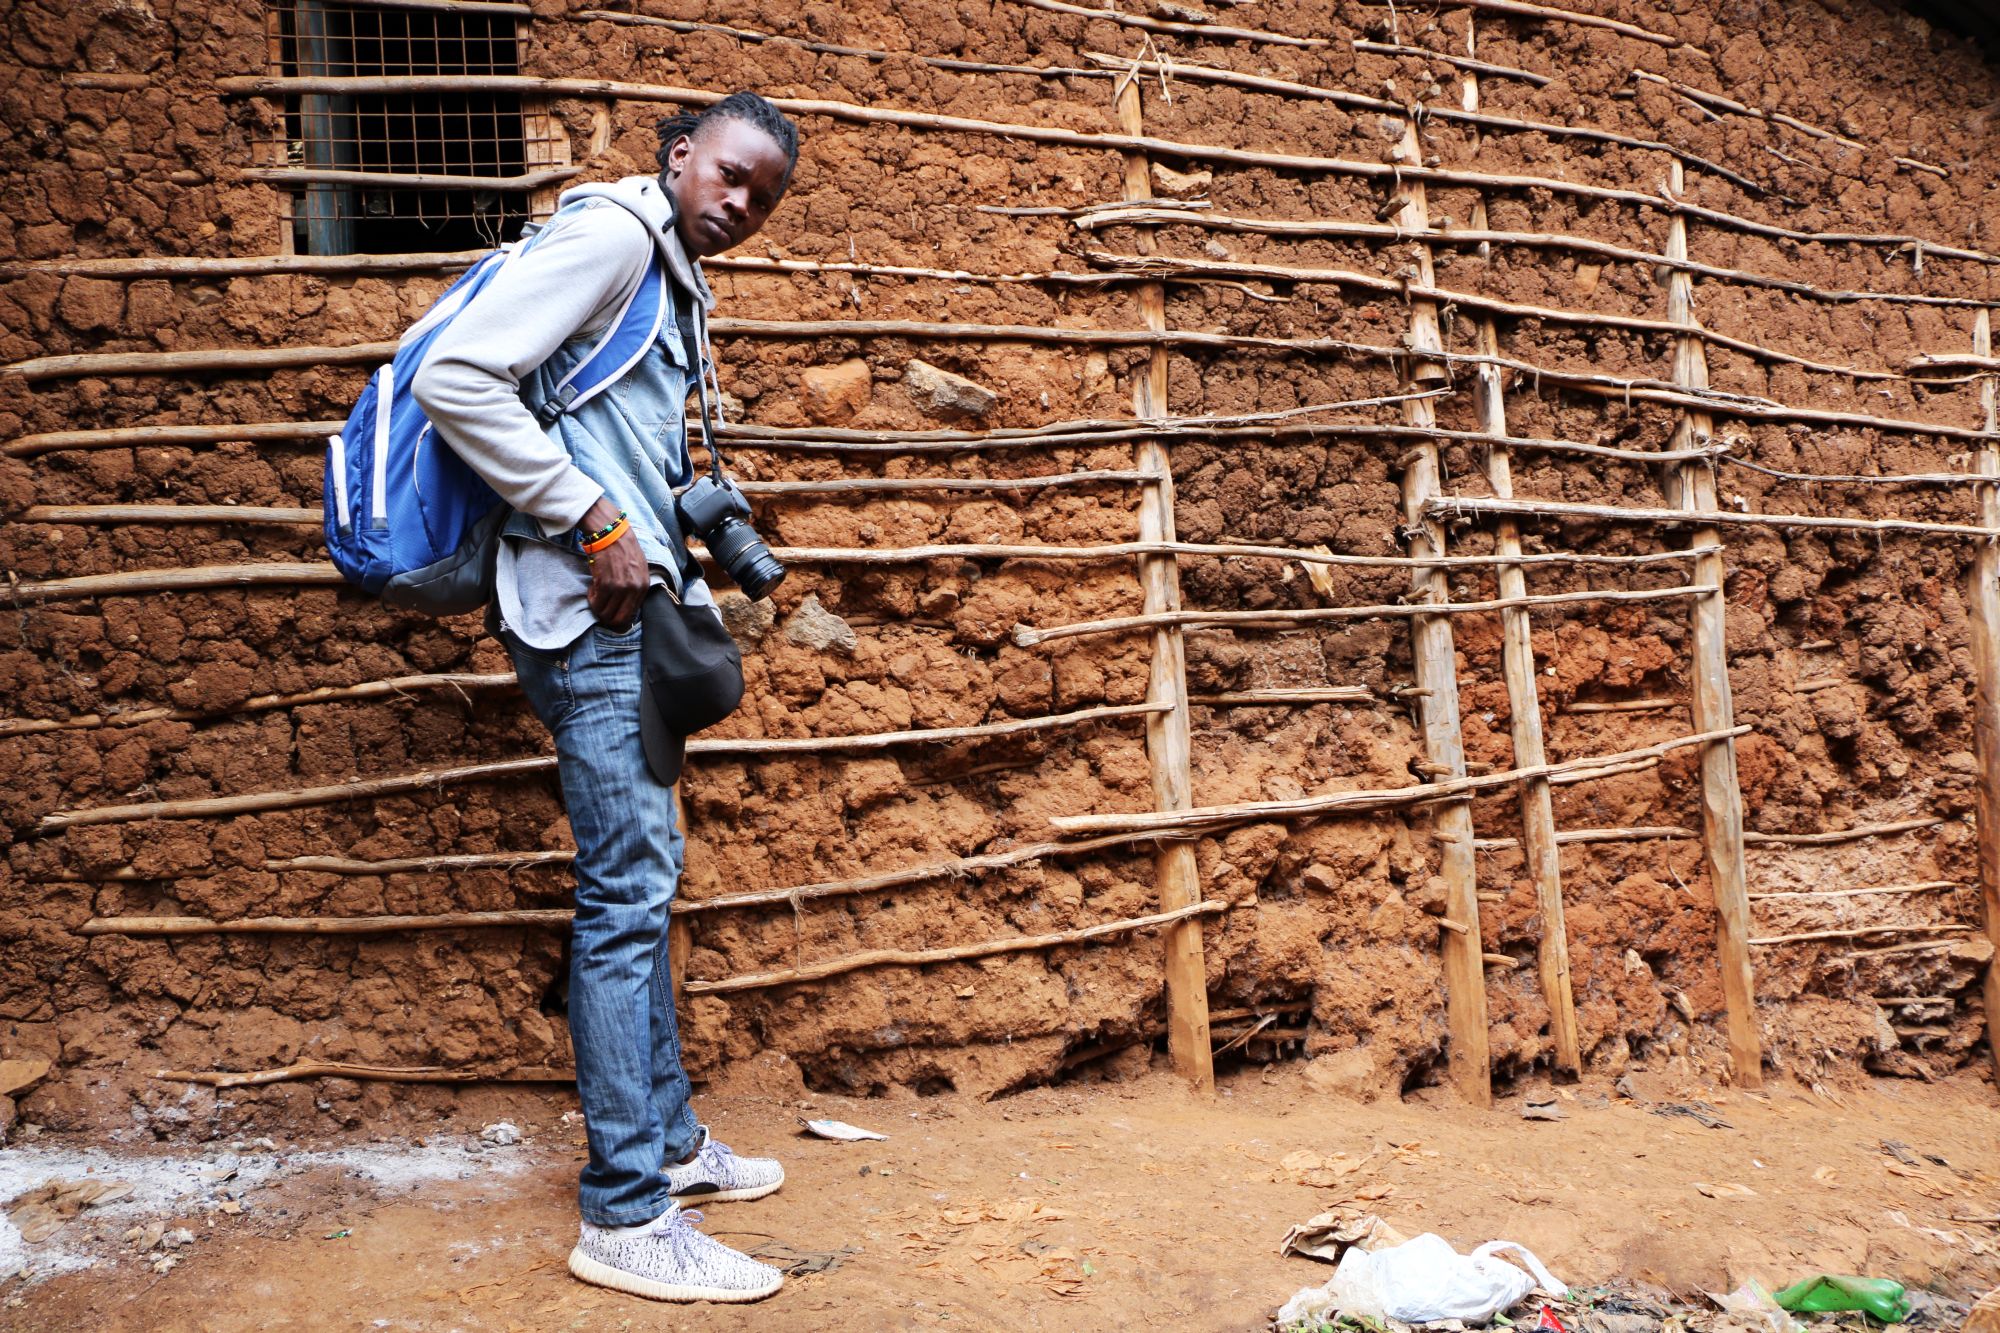 Kibera: Príbeh slumu